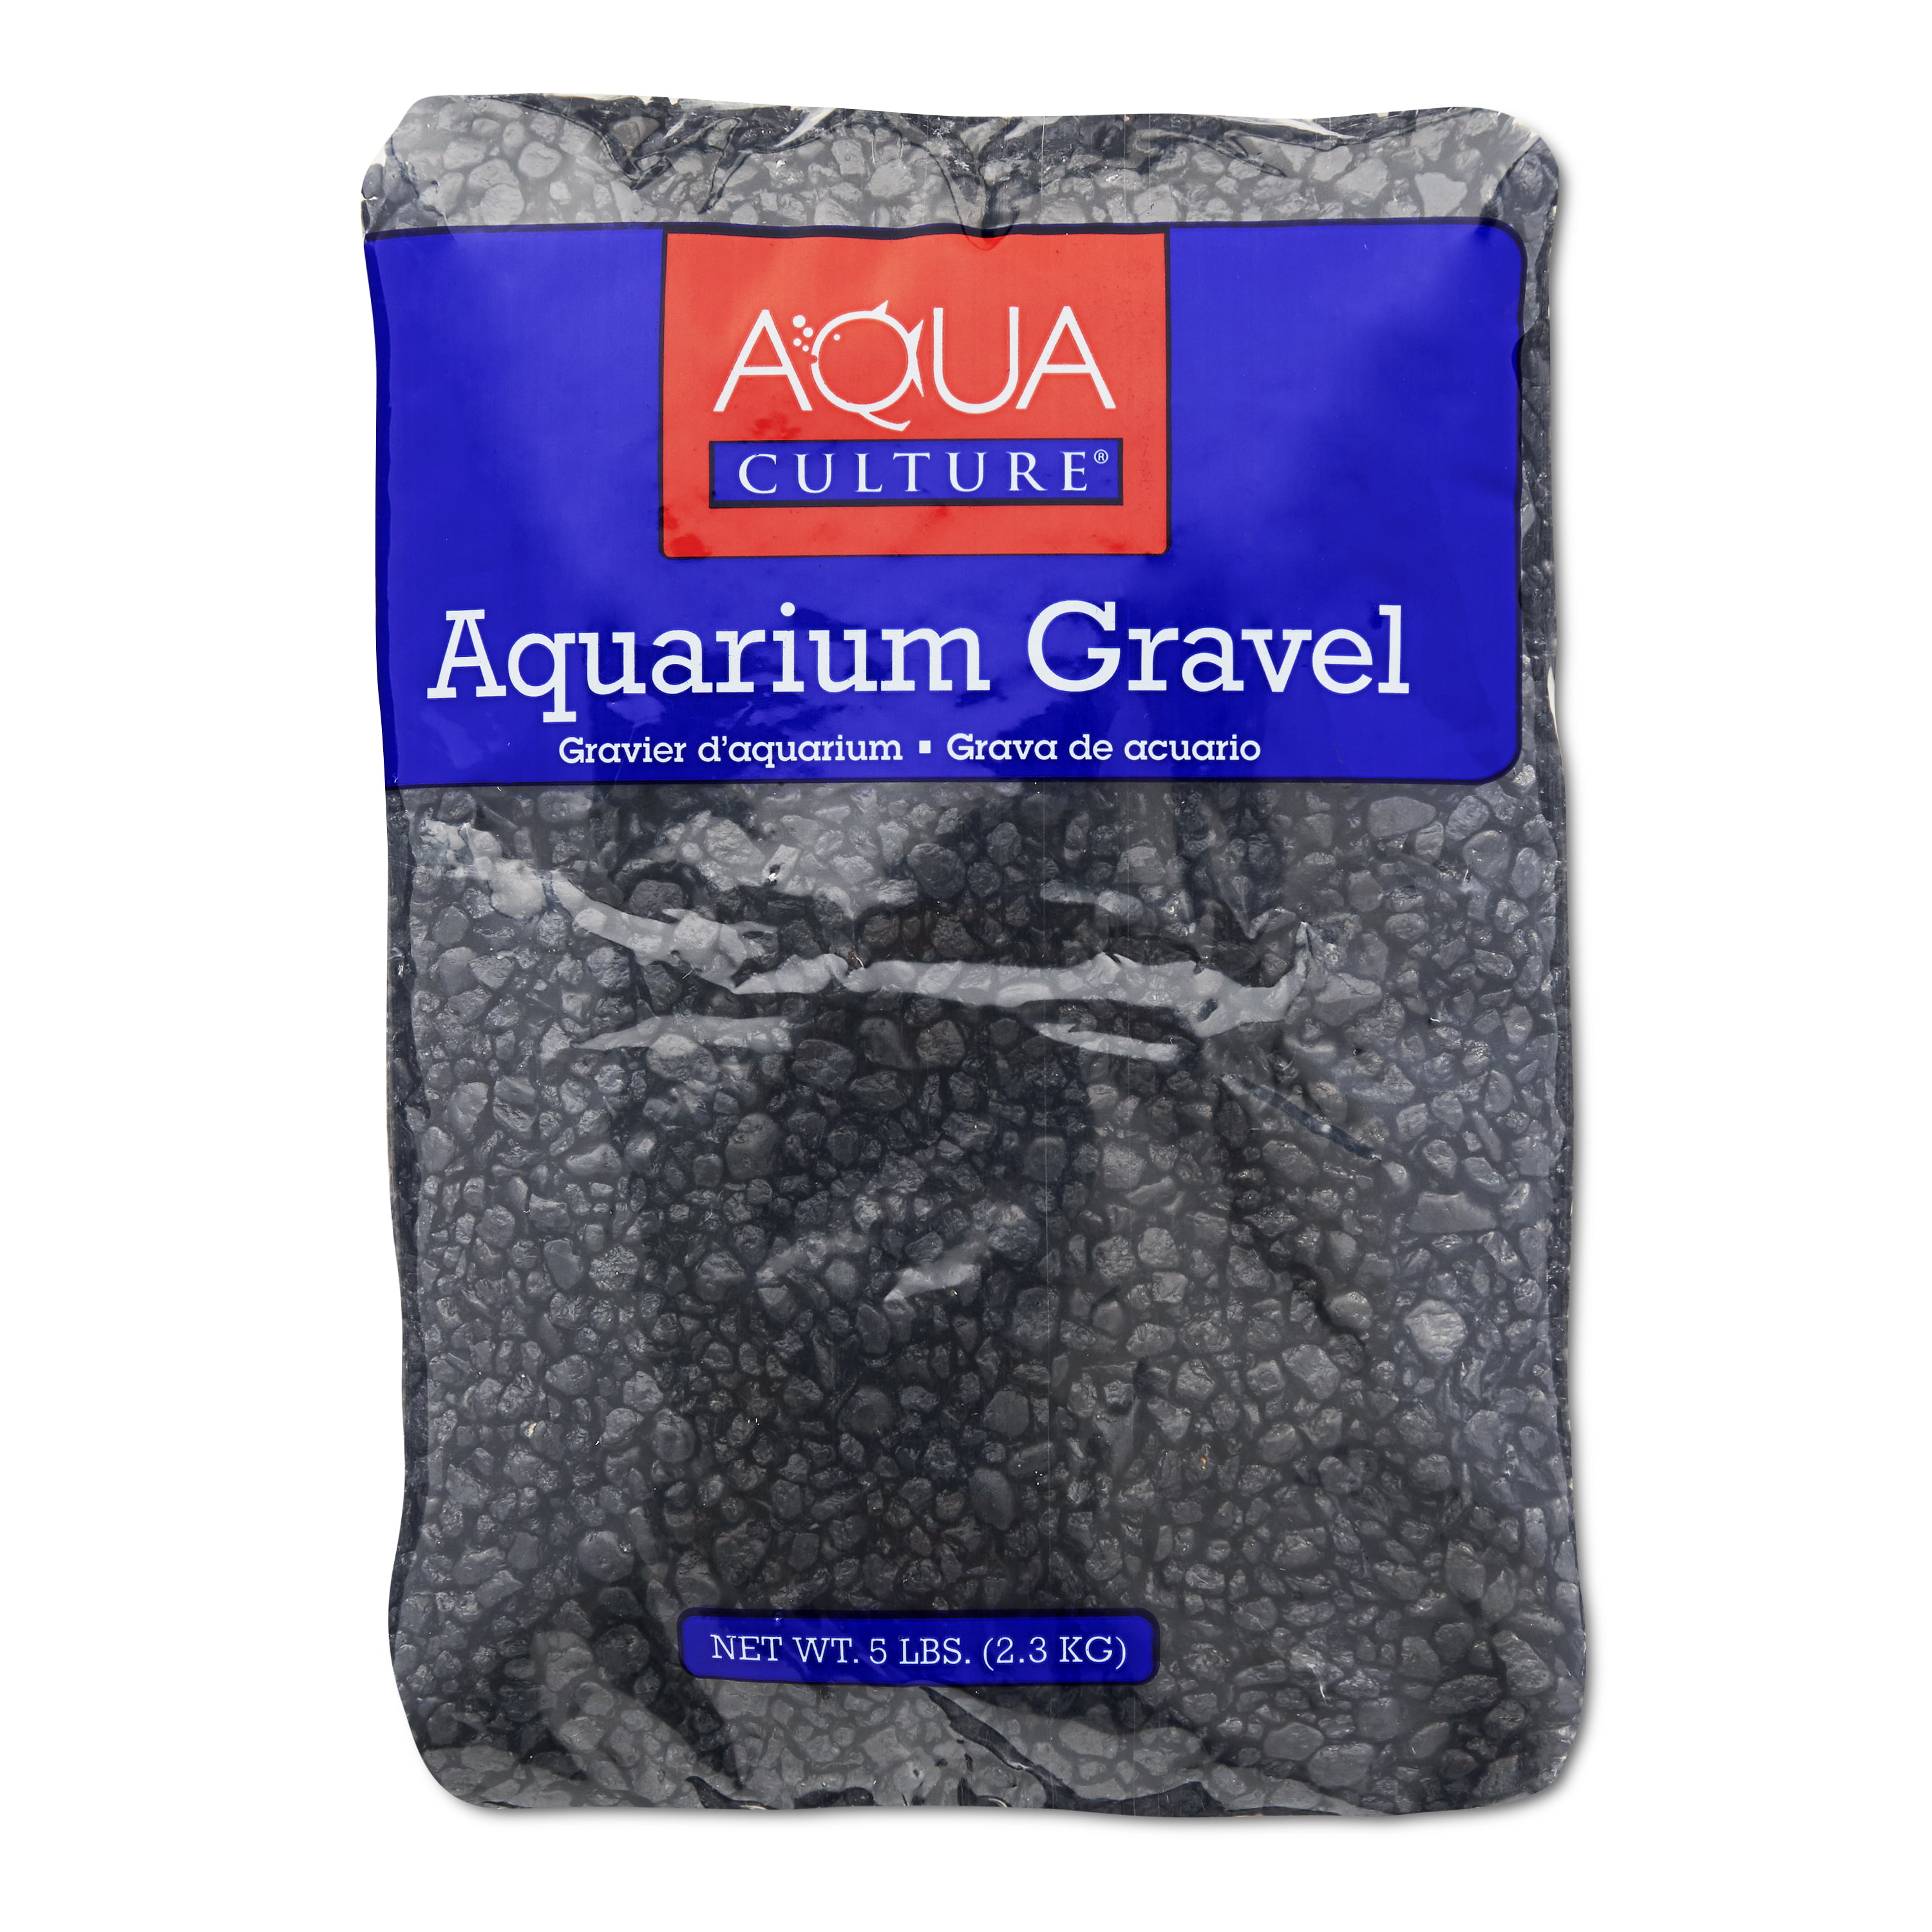 Fish Tank Ideas Black Gravel Tropical-reef-2kg-black-aquarium-fish-tank-gravel-substrate